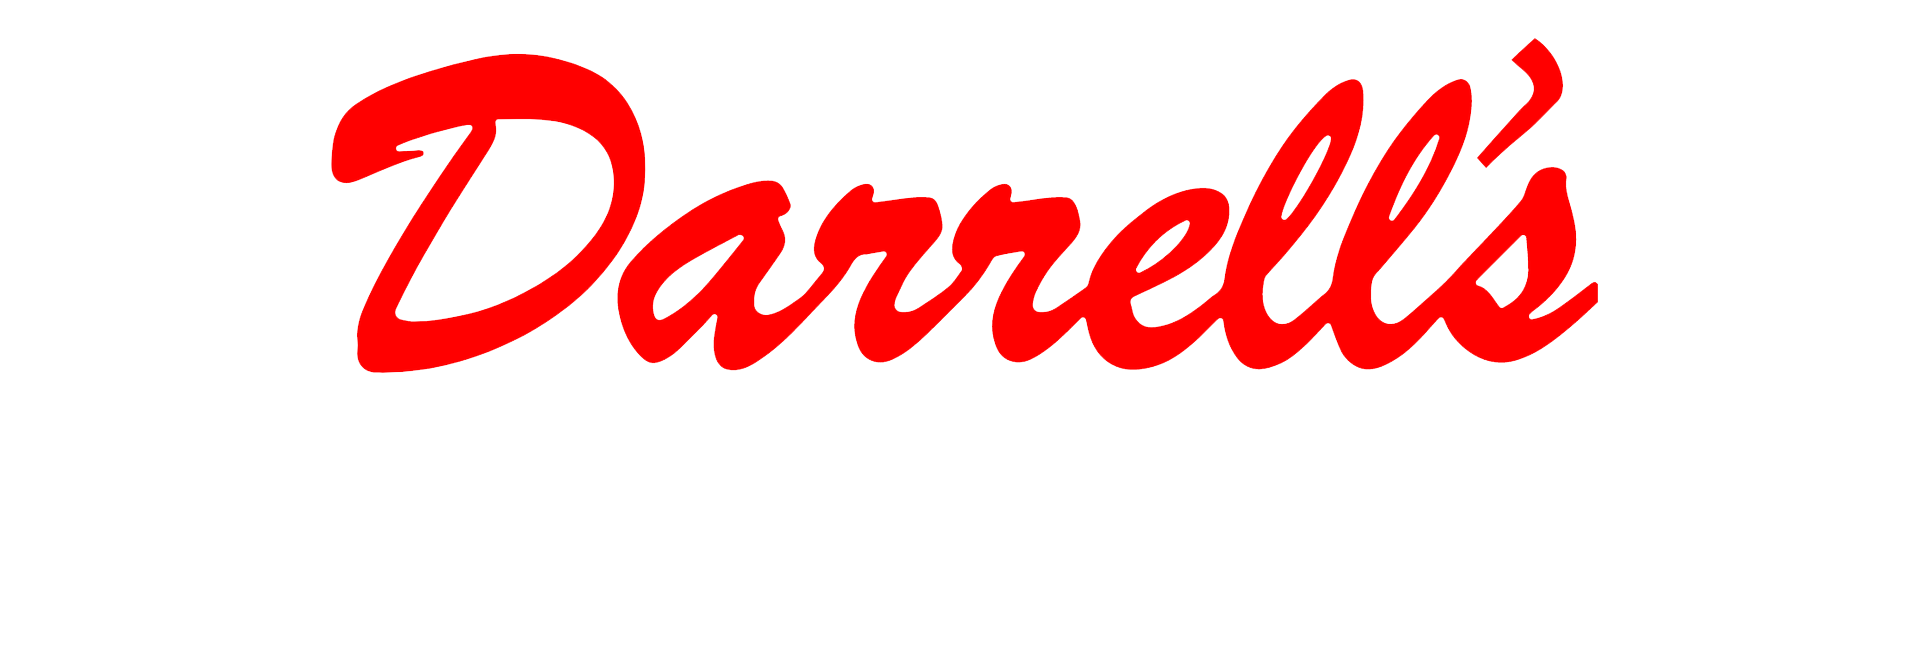 Darrell's Market & Hardware Logo